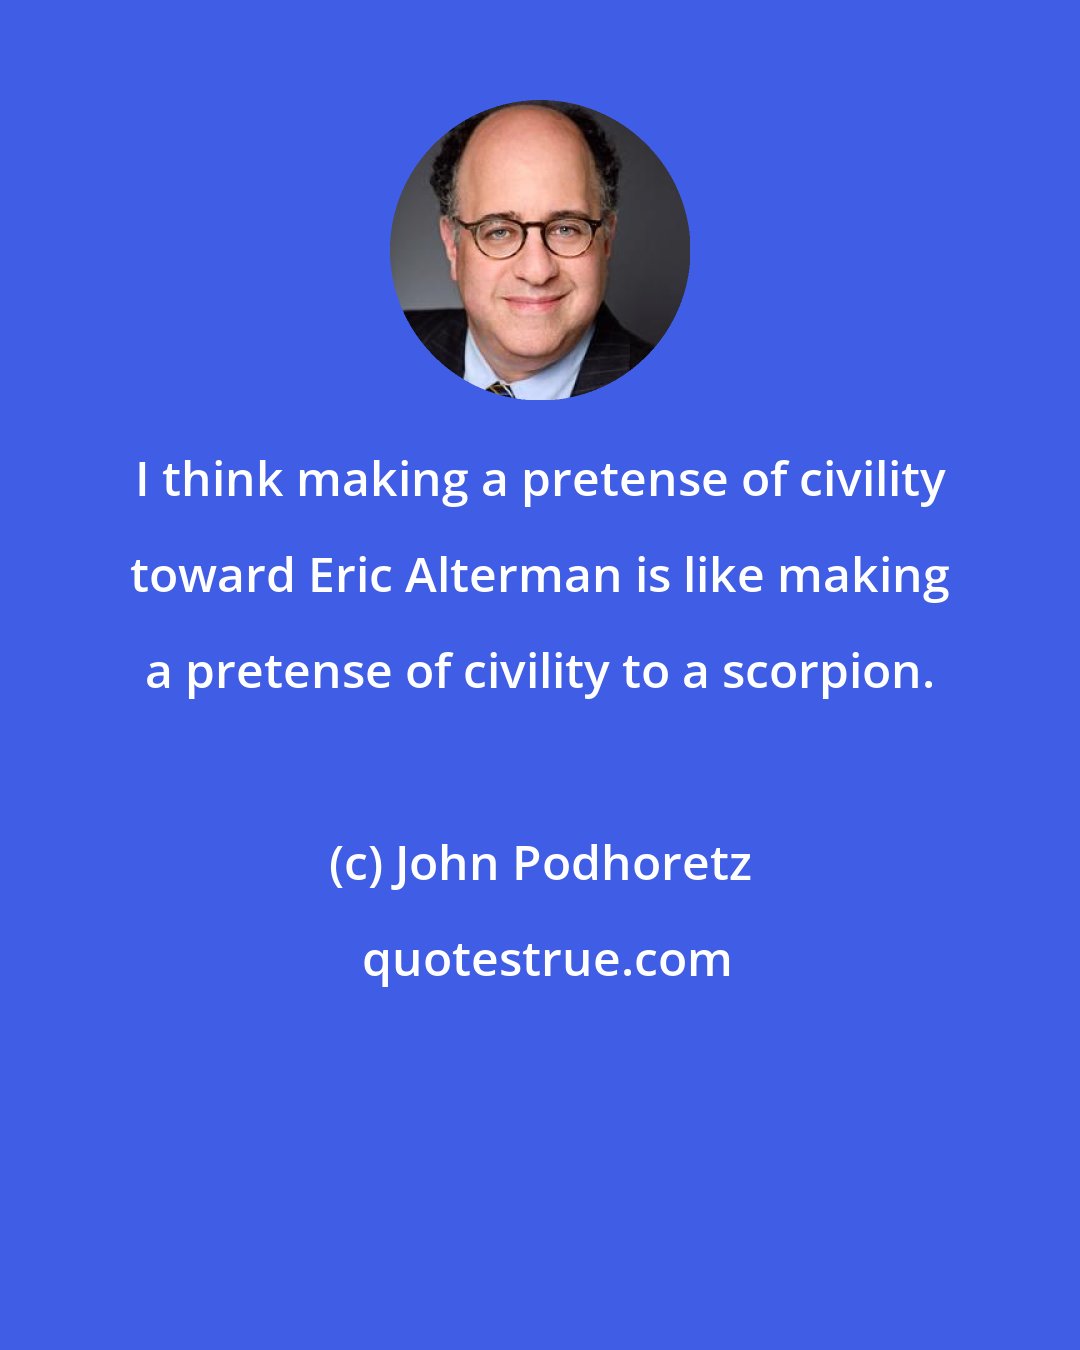 John Podhoretz: I think making a pretense of civility toward Eric Alterman is like making a pretense of civility to a scorpion.